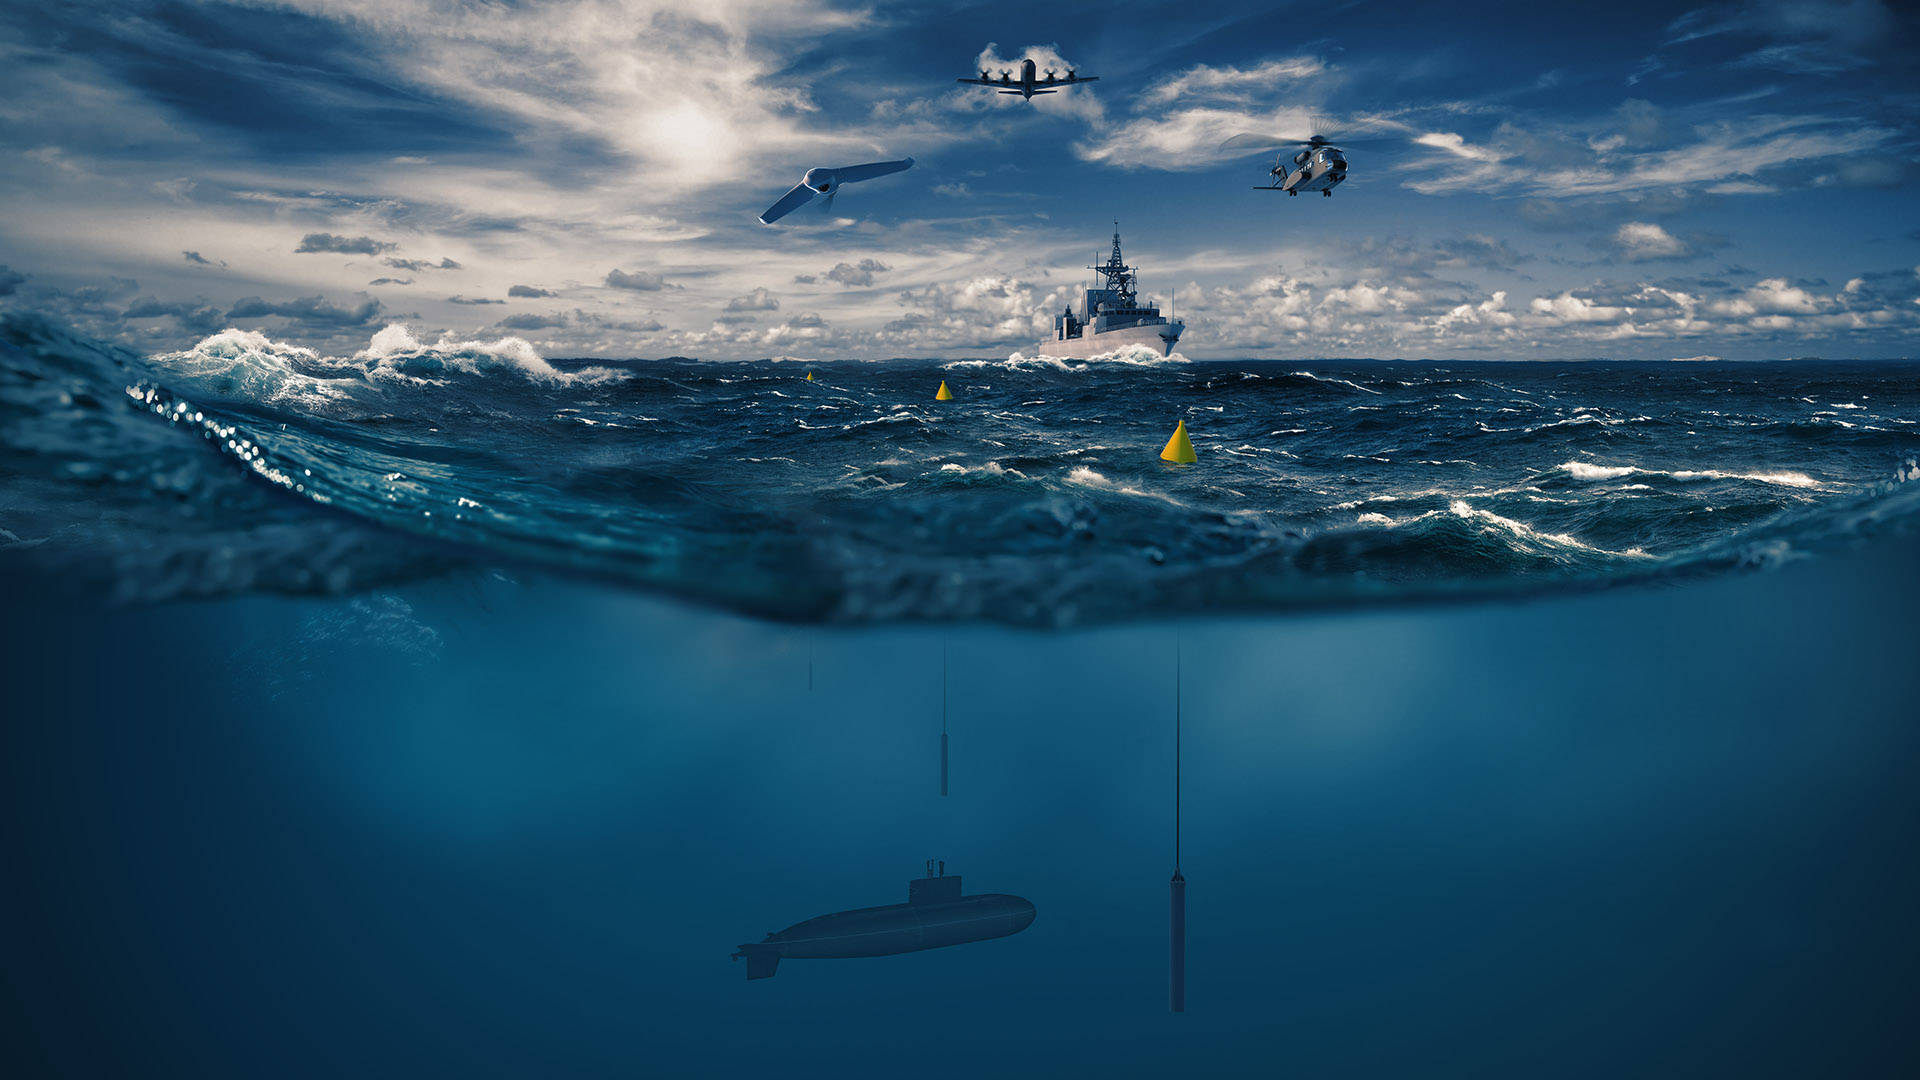 Anti-submarine warfare graphic demonstrating air and sea capabilities.